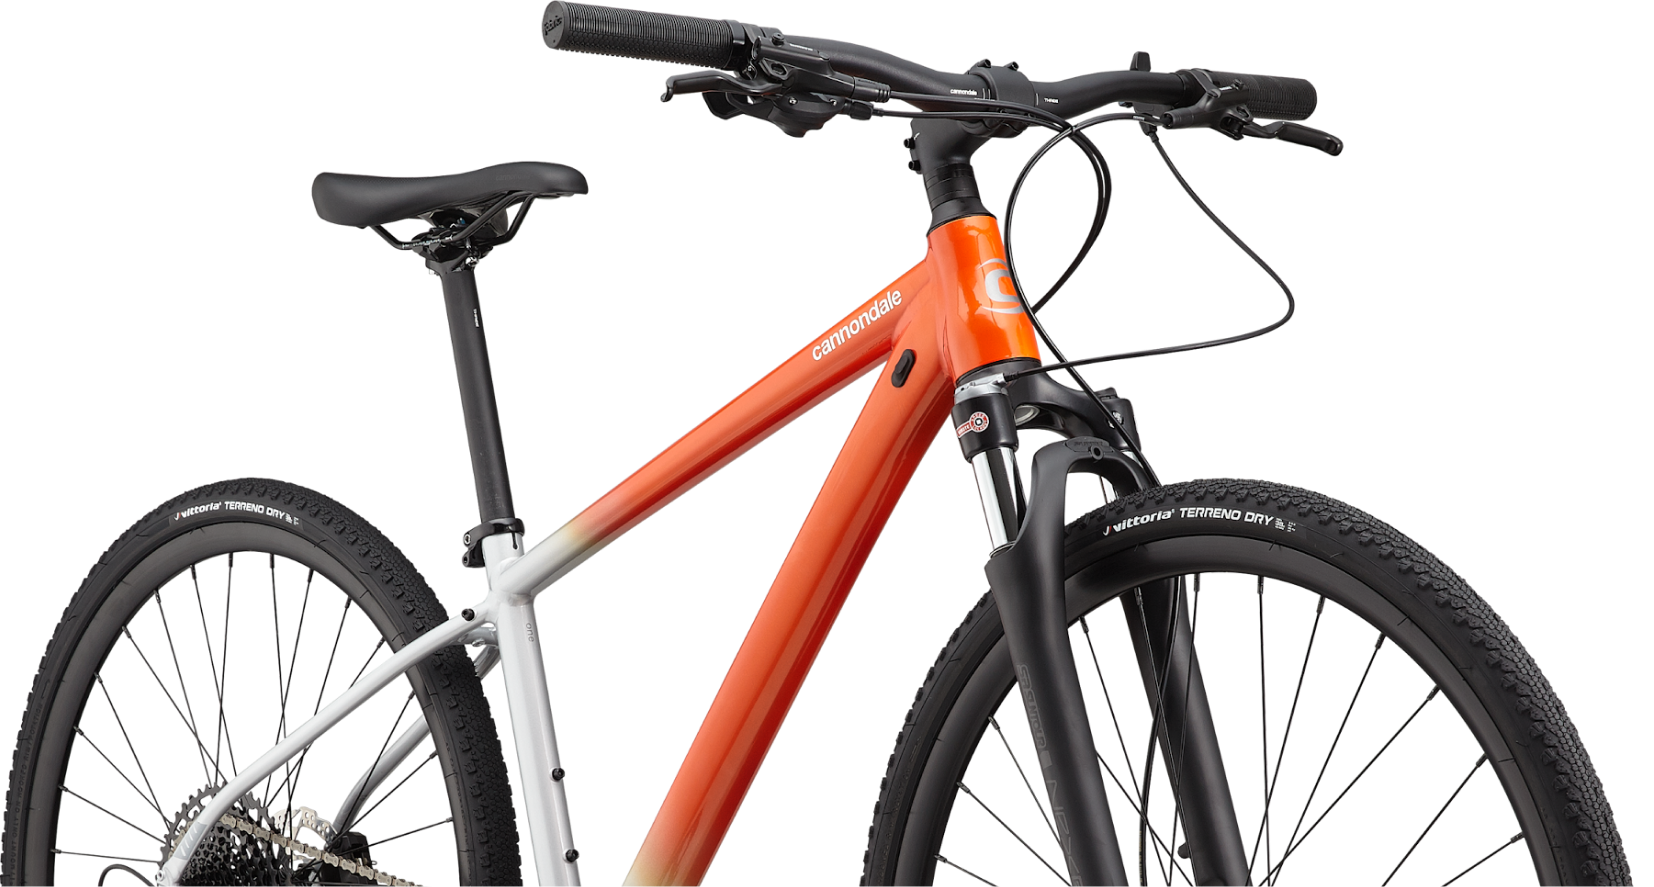 2019 Cannondale Cx 2 híbrido QUICK Bicicleta Pequeno Varejo $1150 